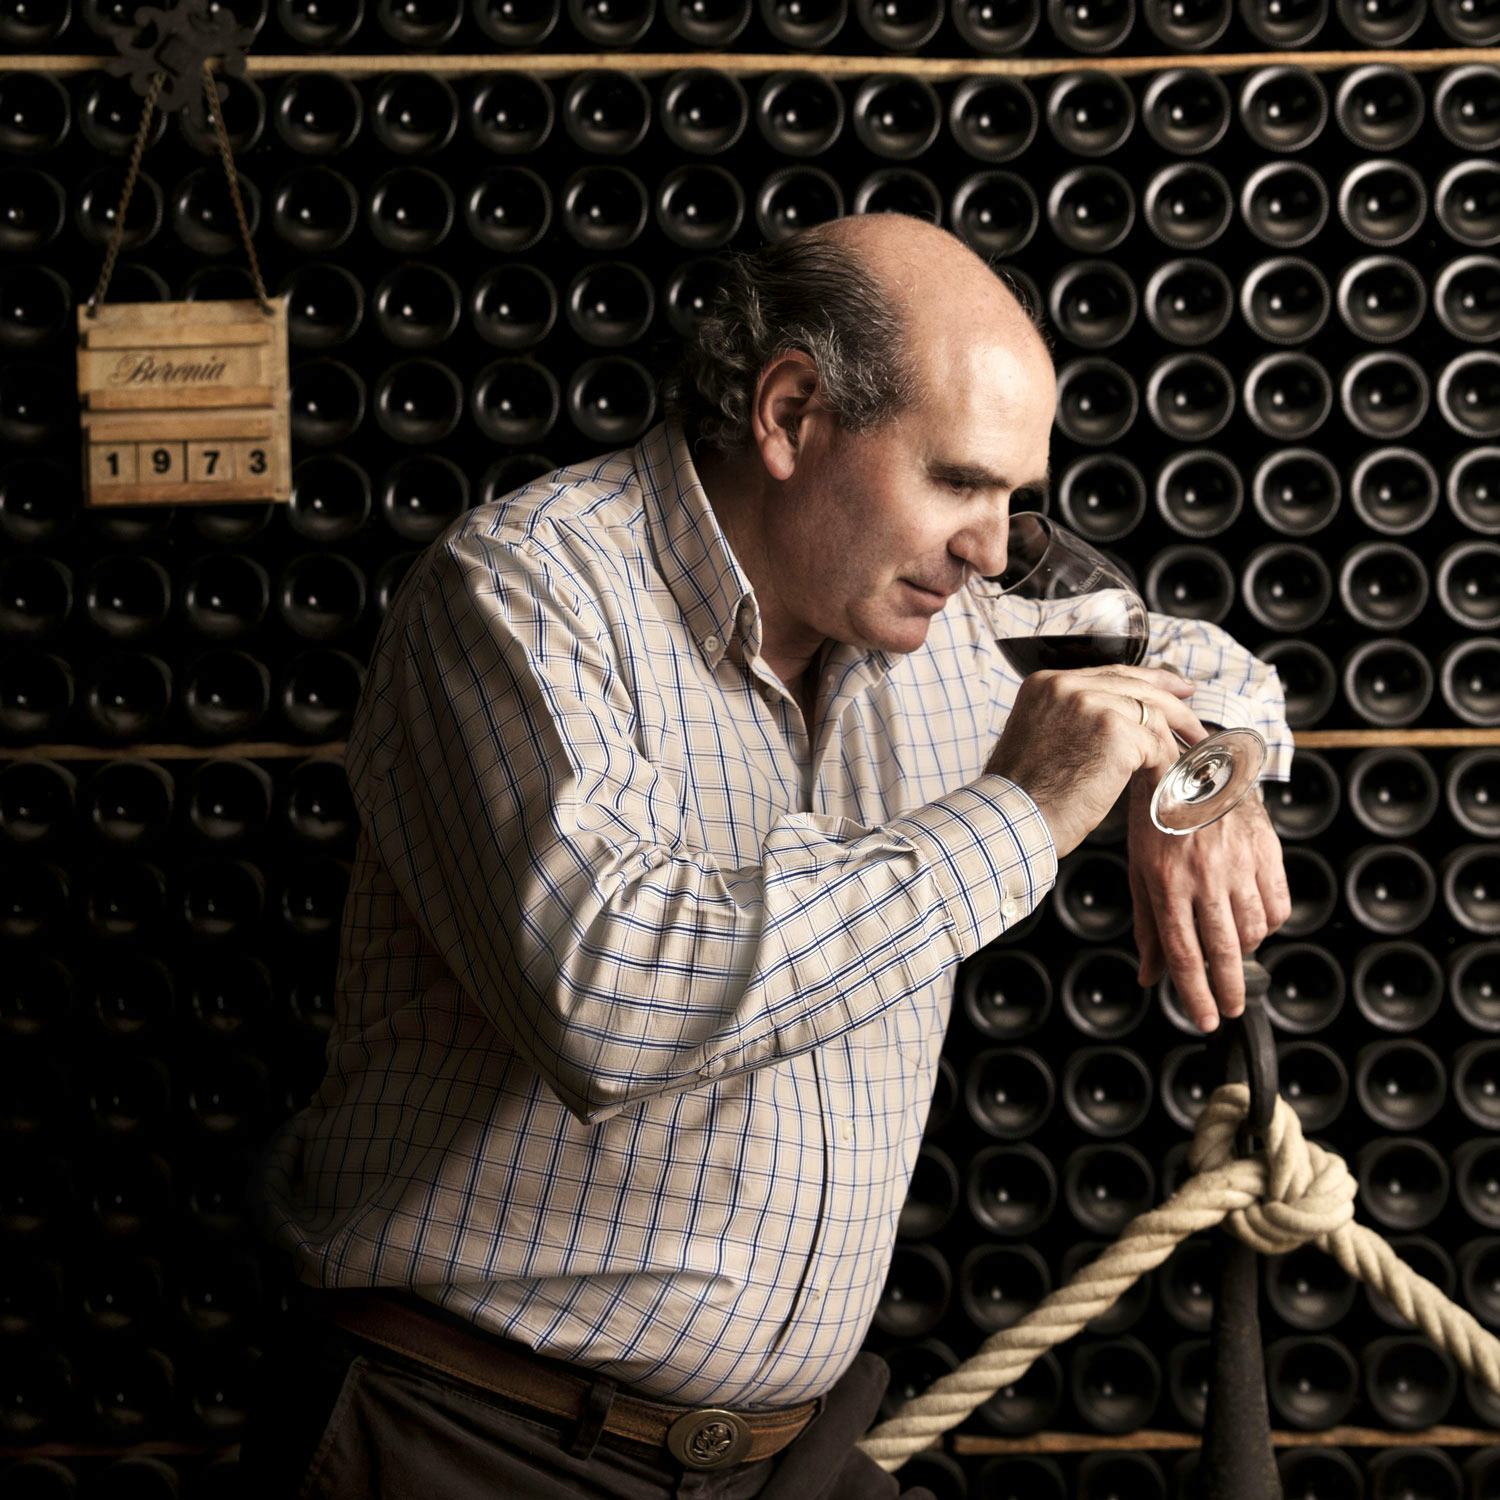 Beronia wines owner in wine cellar